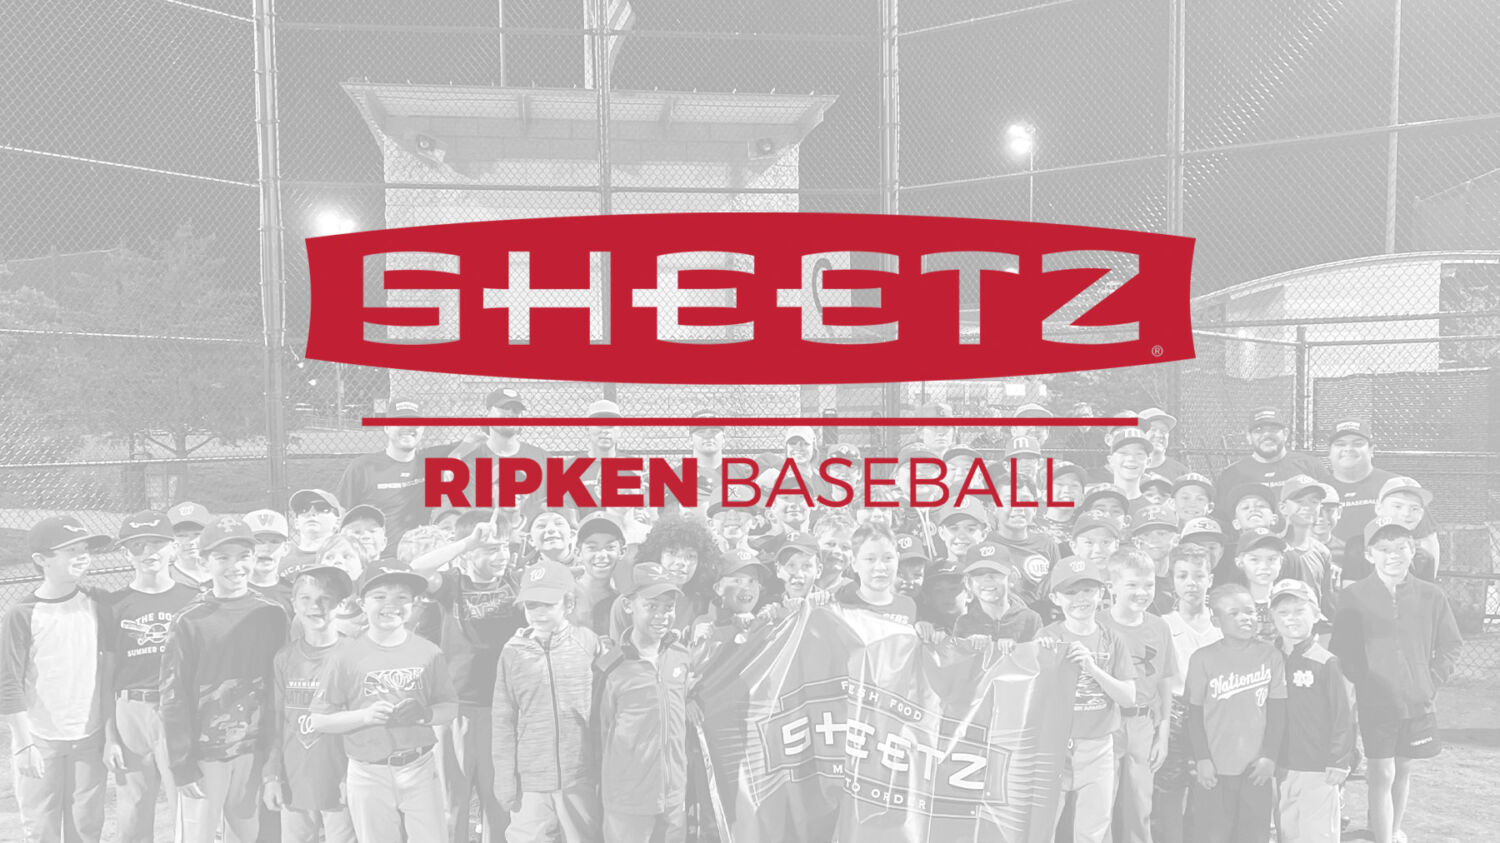 Sheetz and Ripken Baseball Hit a Home Run With Community-Focused Baseball Clinics